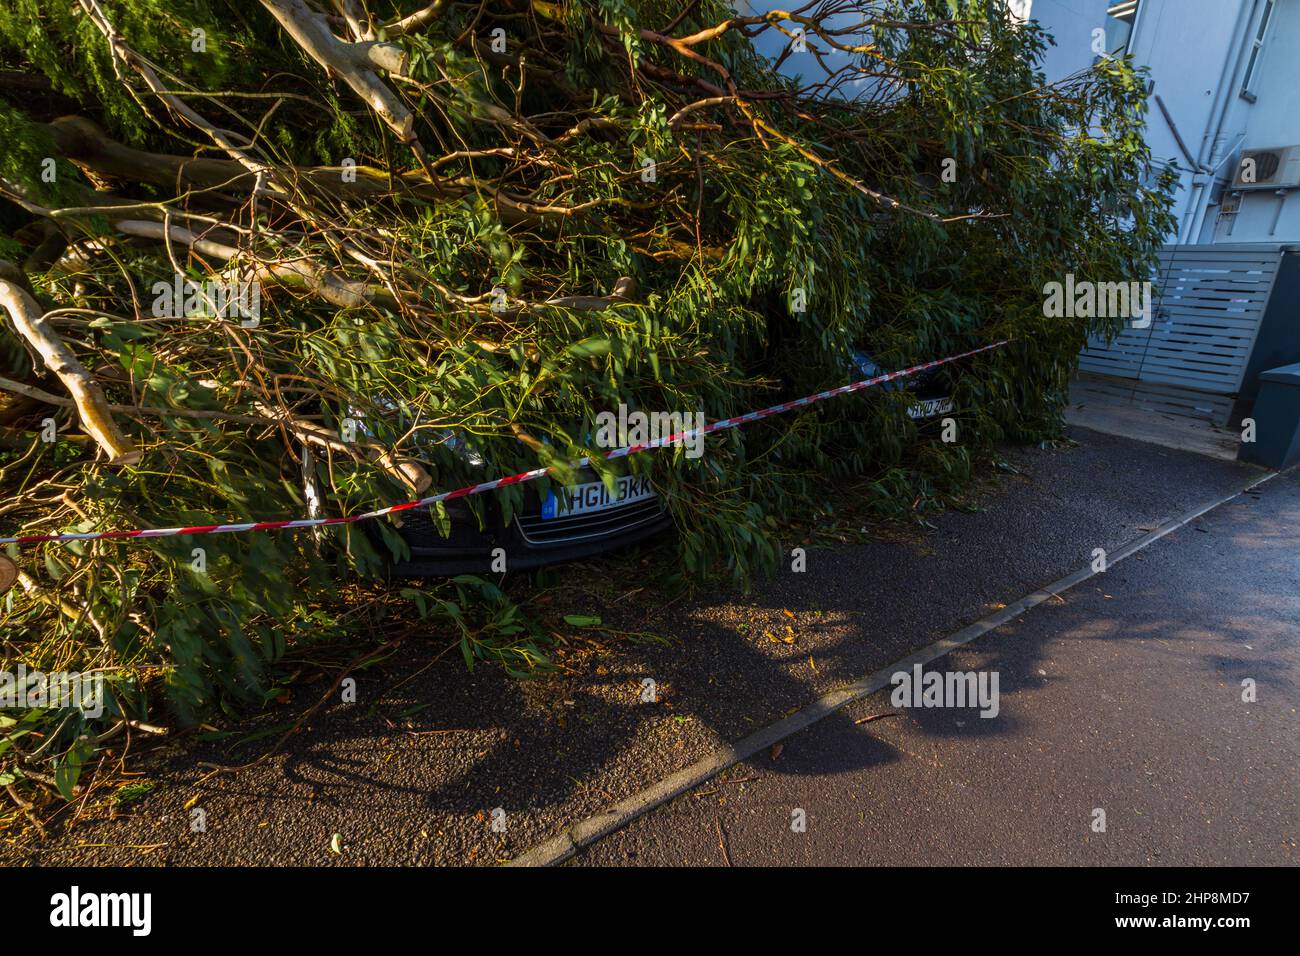 BOURNEMOUTH, INGLATERRA Reino Unido – FEBRERO 19: Storm Eunice Arbol grande caído aplastando dos coches, placas de registro mostrando, gran angular, desde el lado, paisaje Foto de stock